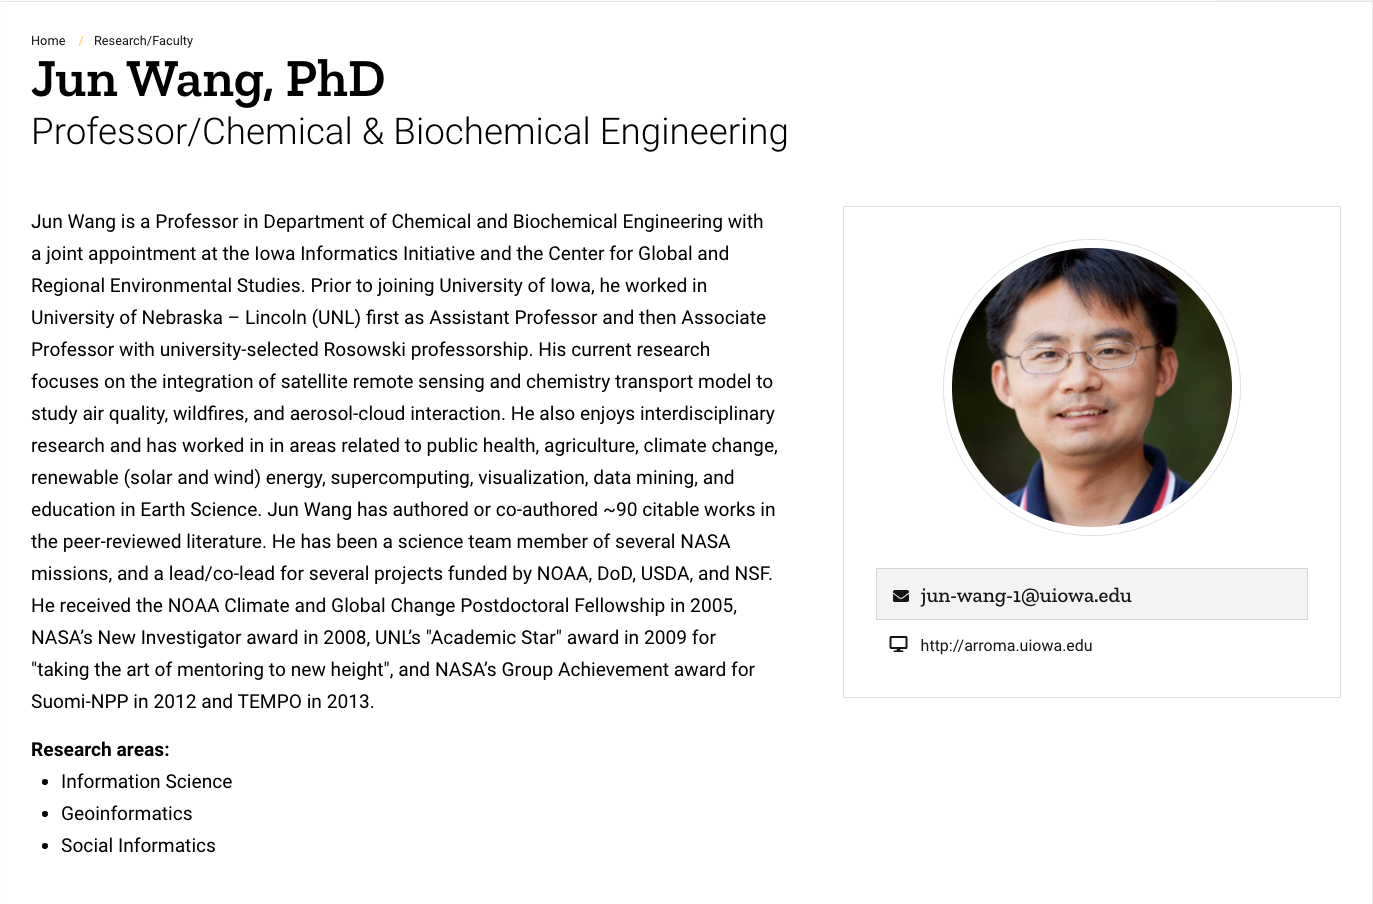 Jun Wang, PhD updated profile page on Informatics website